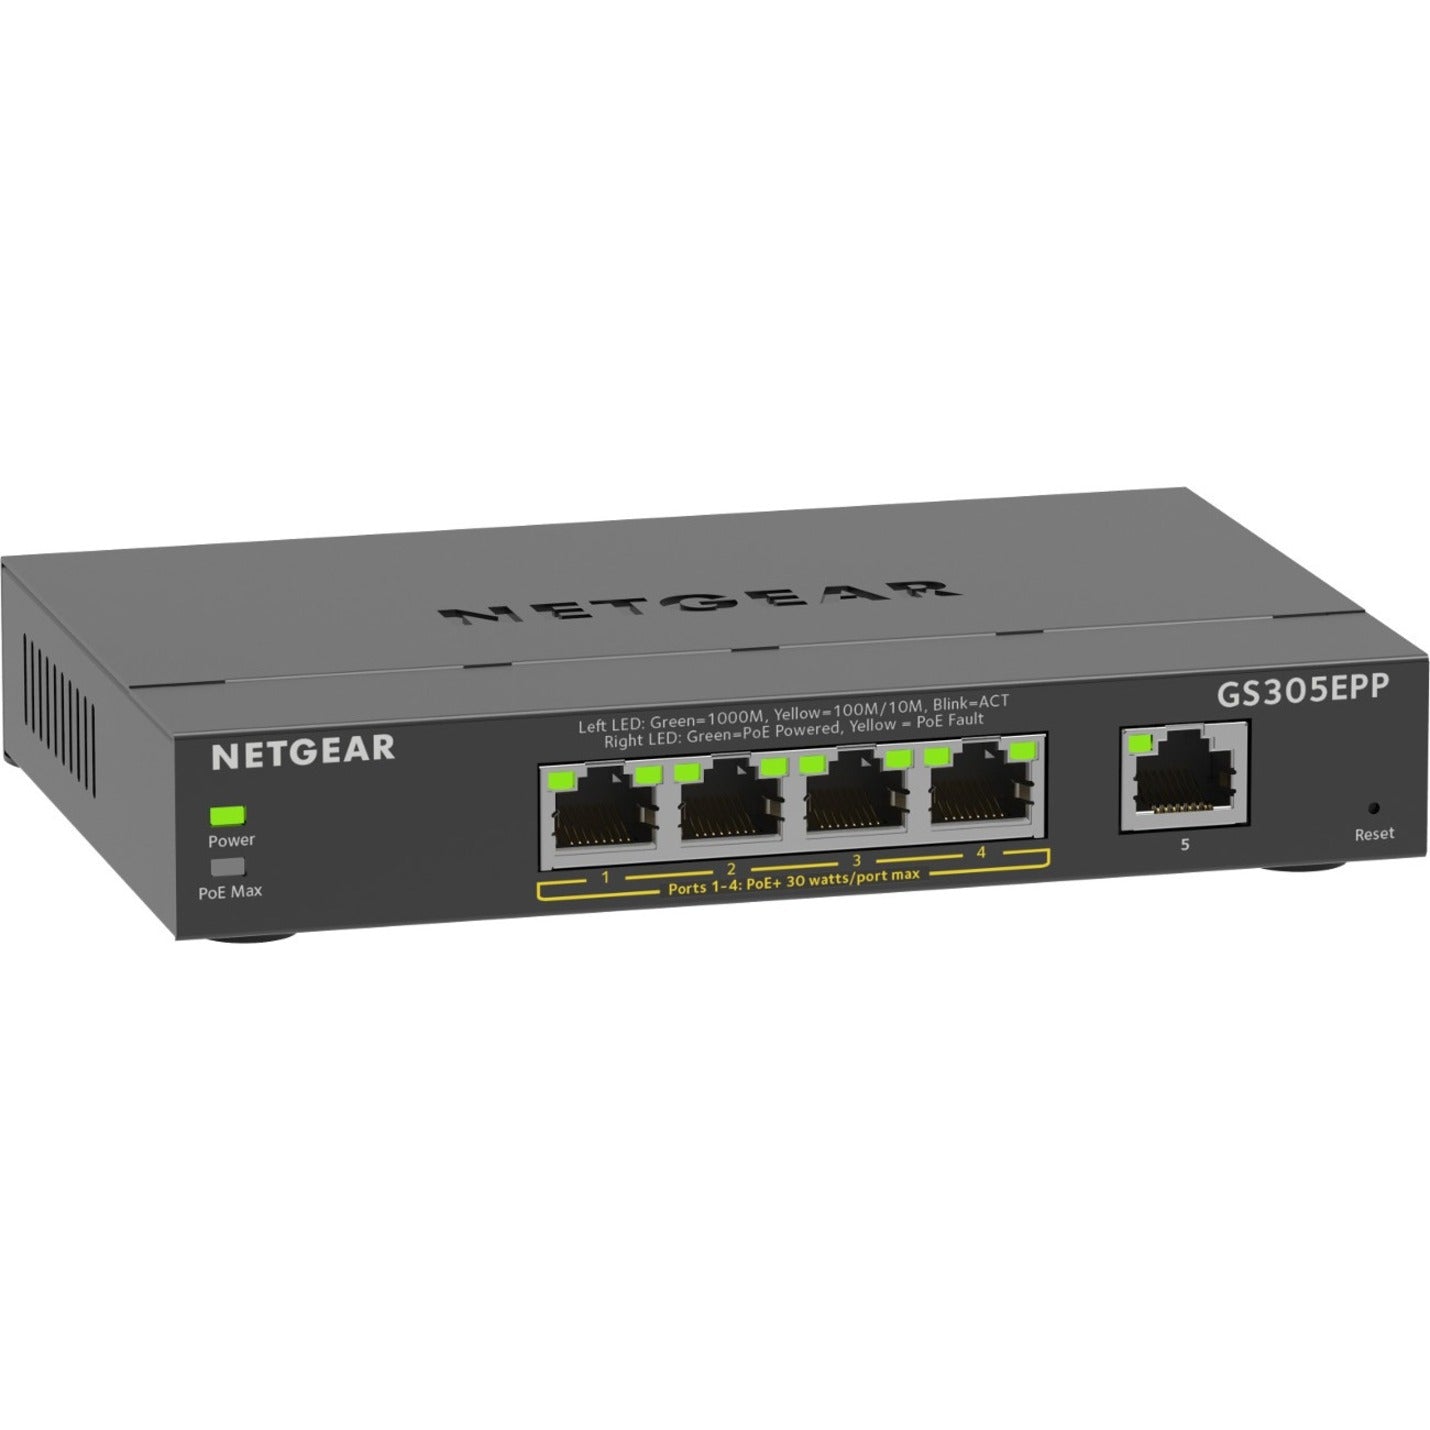 Netgear GS305EPP-100NAS Commutateur Ethernet GS305EPP 5 ports Gigabit Ethernet PoE + 120W Budget PoE